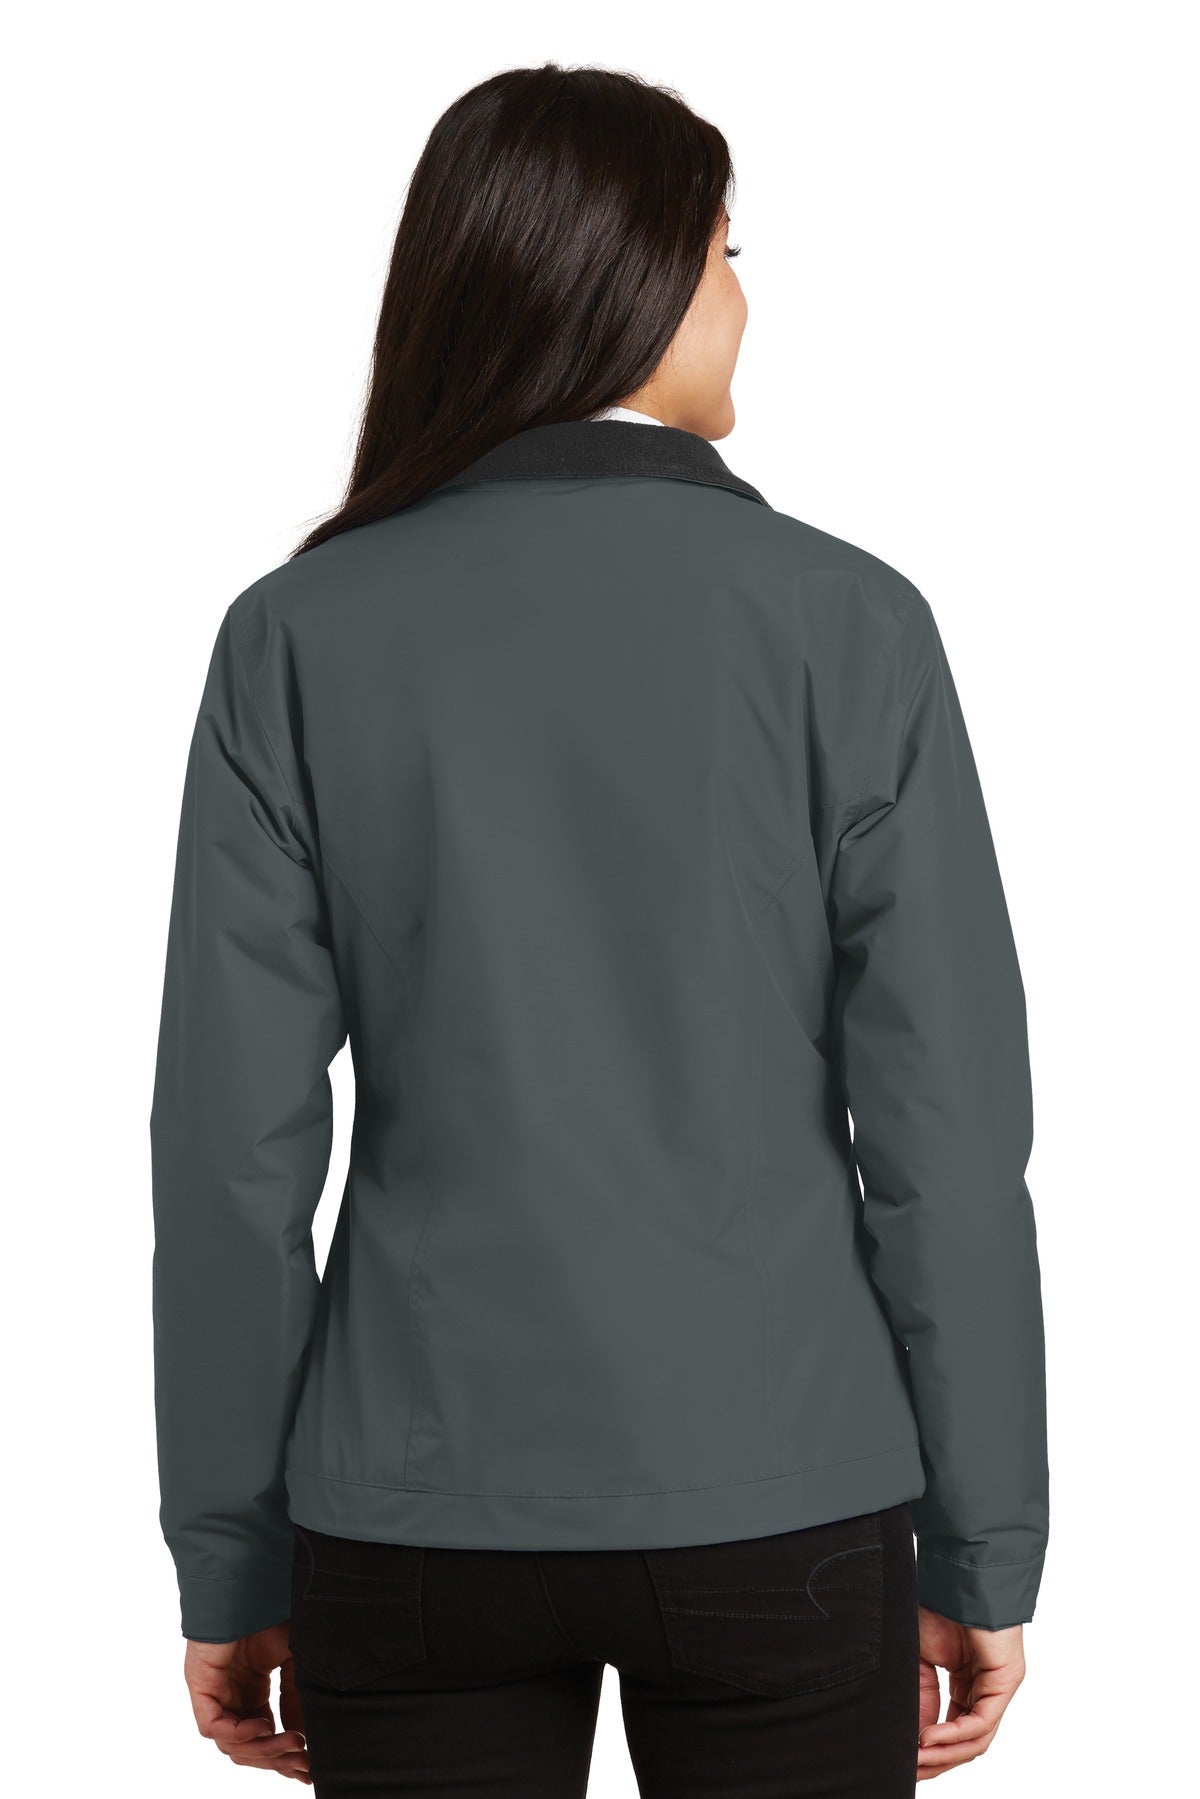 Port Authority® Ladies Challenger™ Jacket. L354 - DFW Impression